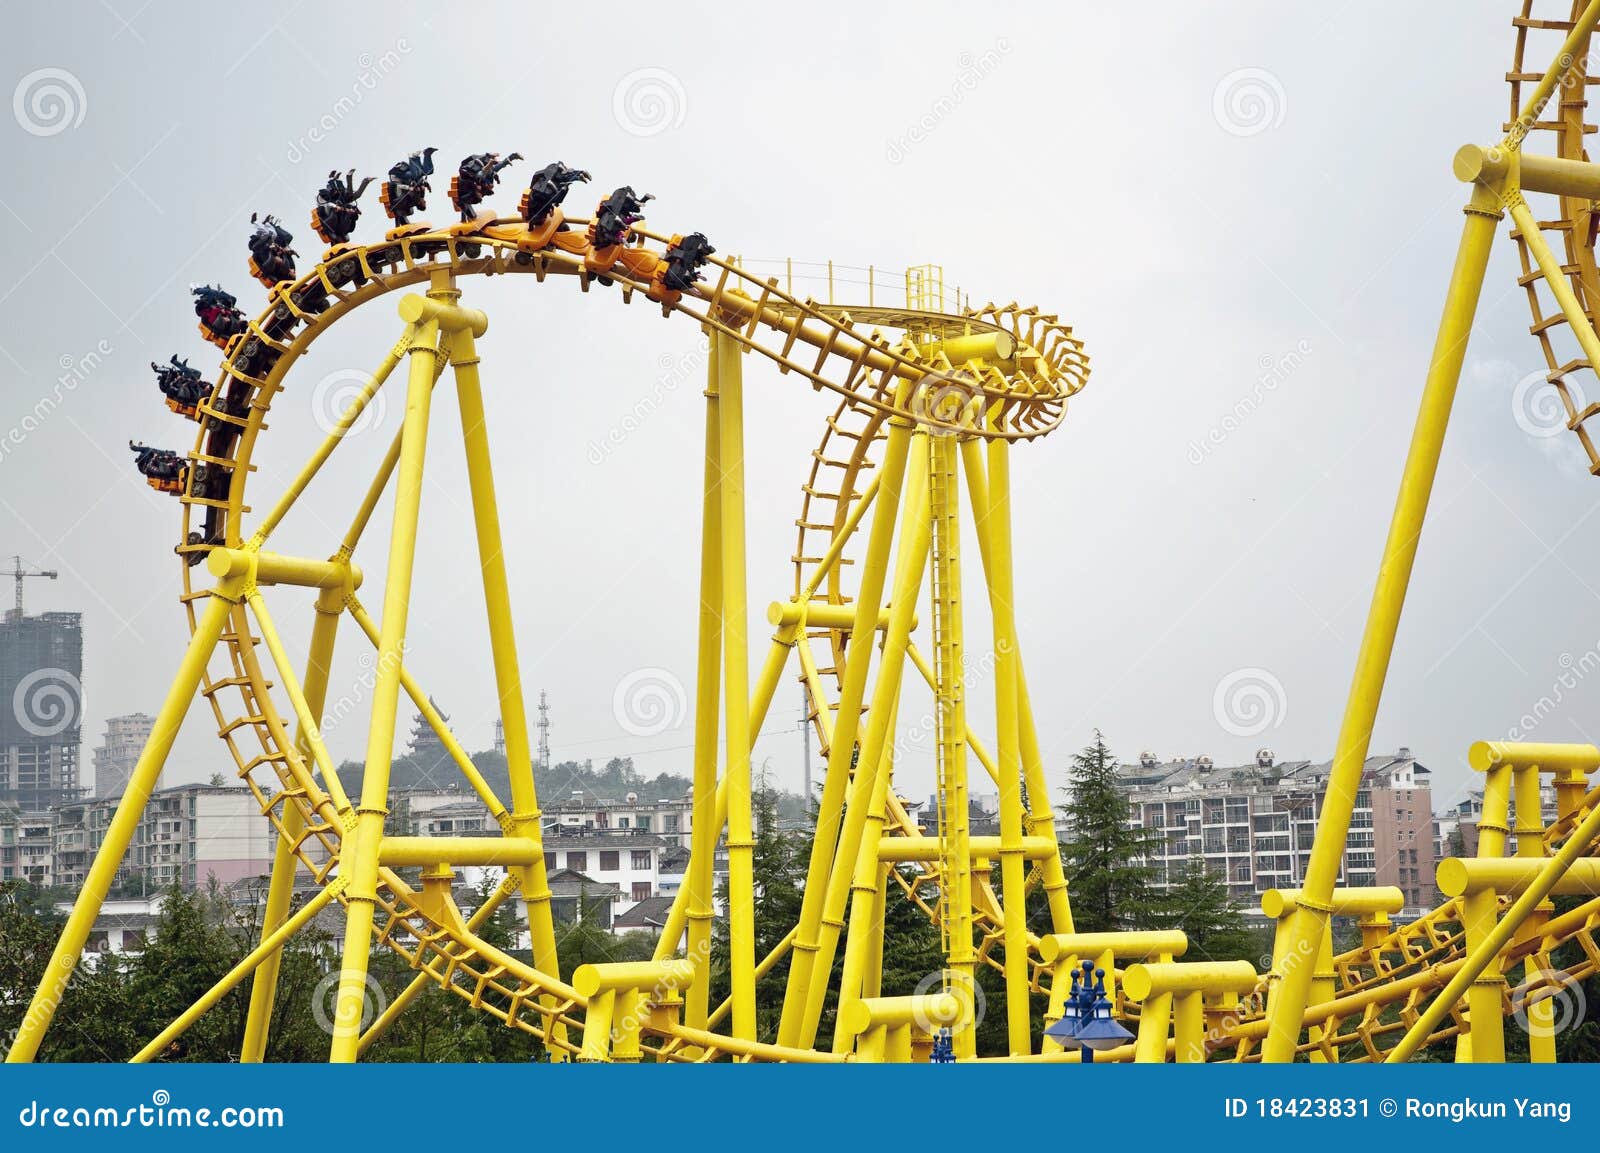 Roller Coaster Stock Image Image Of Coaster Blue Steel